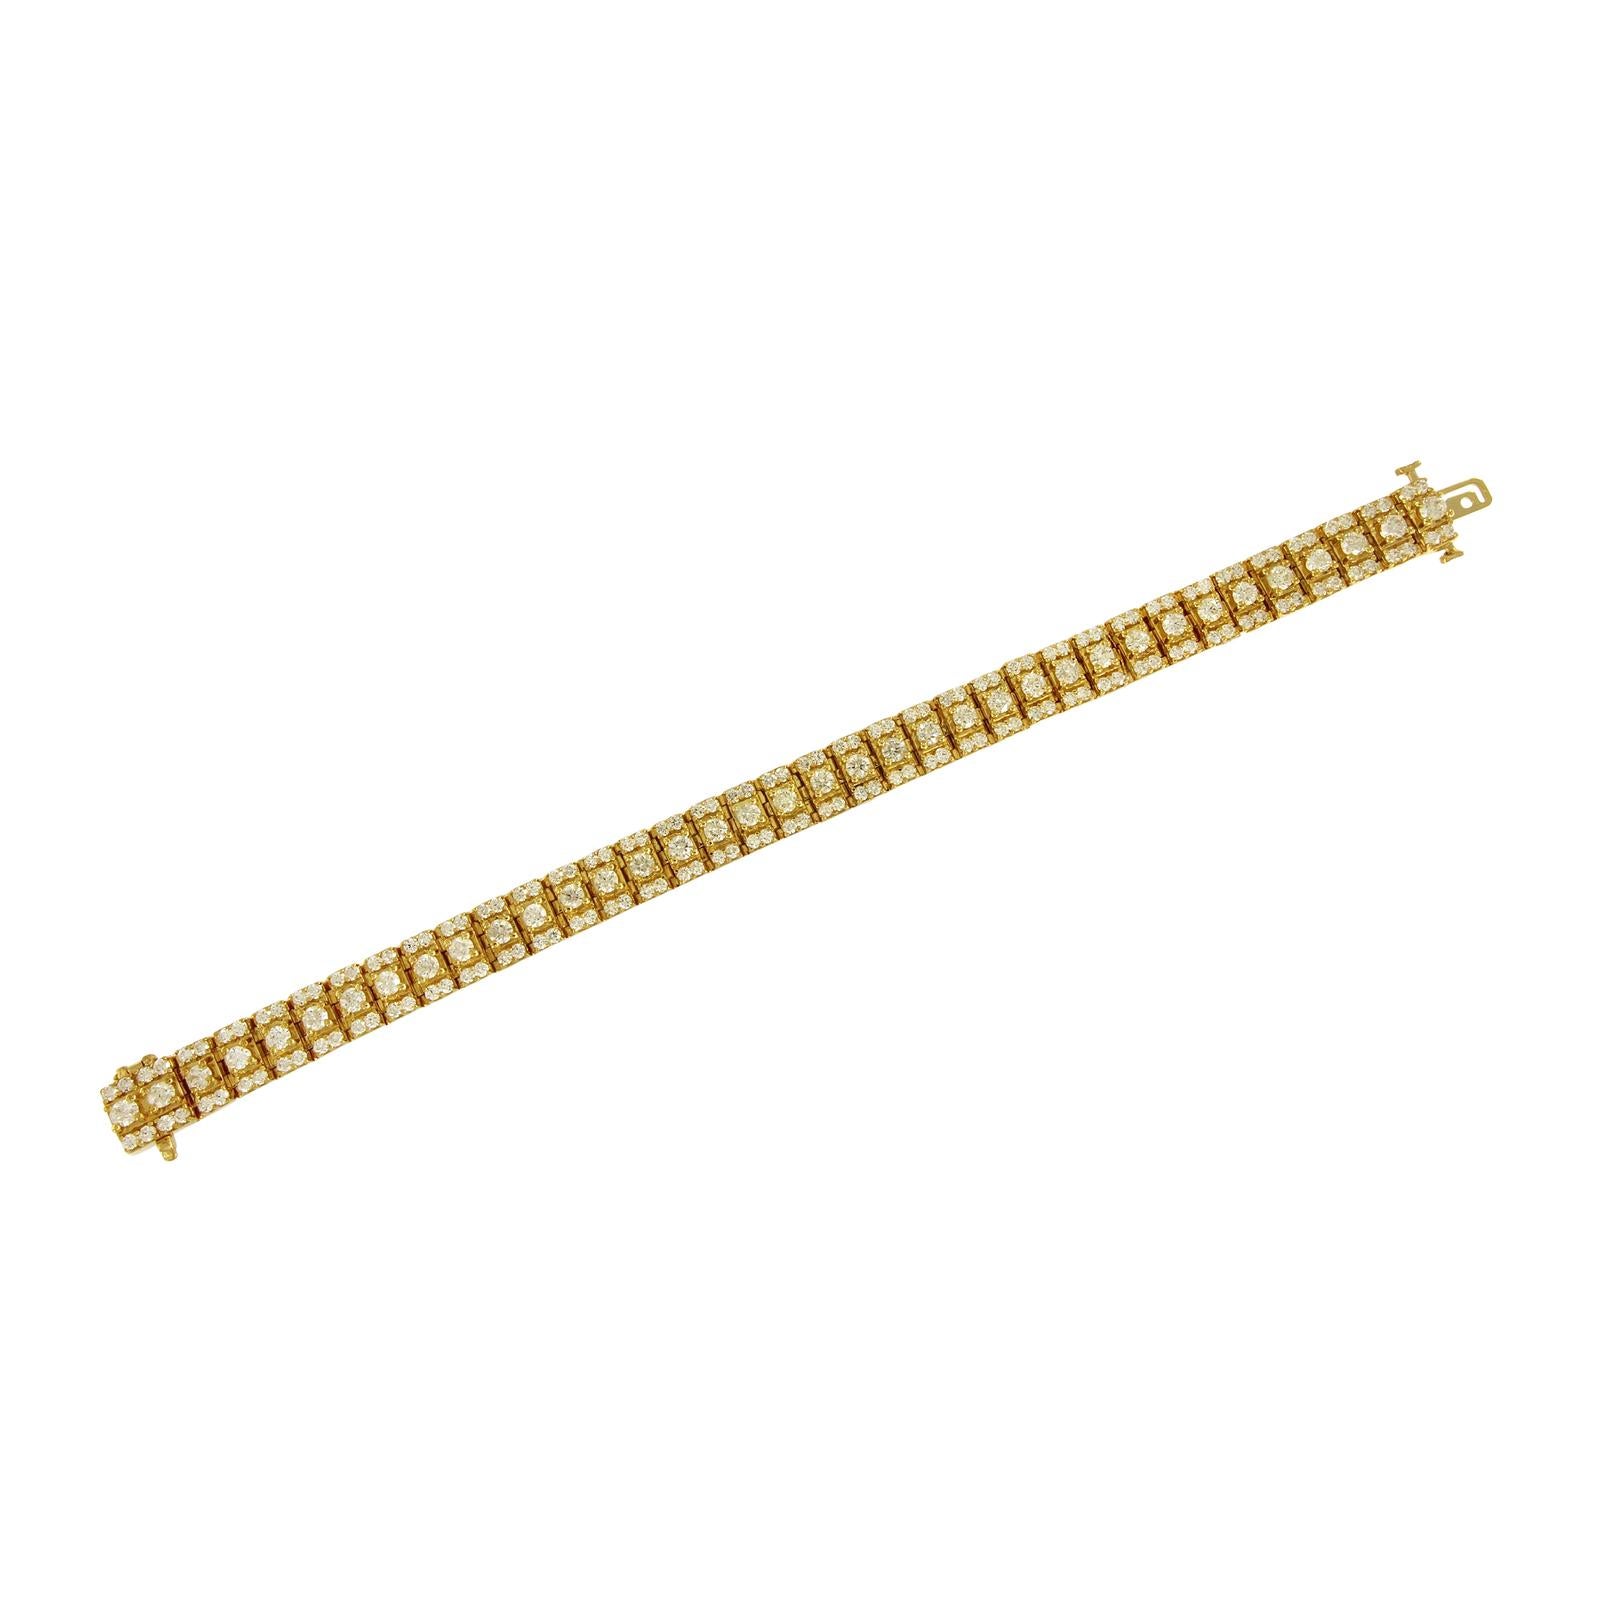 Custom made
14k Yellow Gold
Bracelet length: 8”
Bracelet width: 10mm
Bracelet weight: 53.9gr
Diamond: 11.6ct, SI1 clarity, G color 
Original Retail: $ 18,000